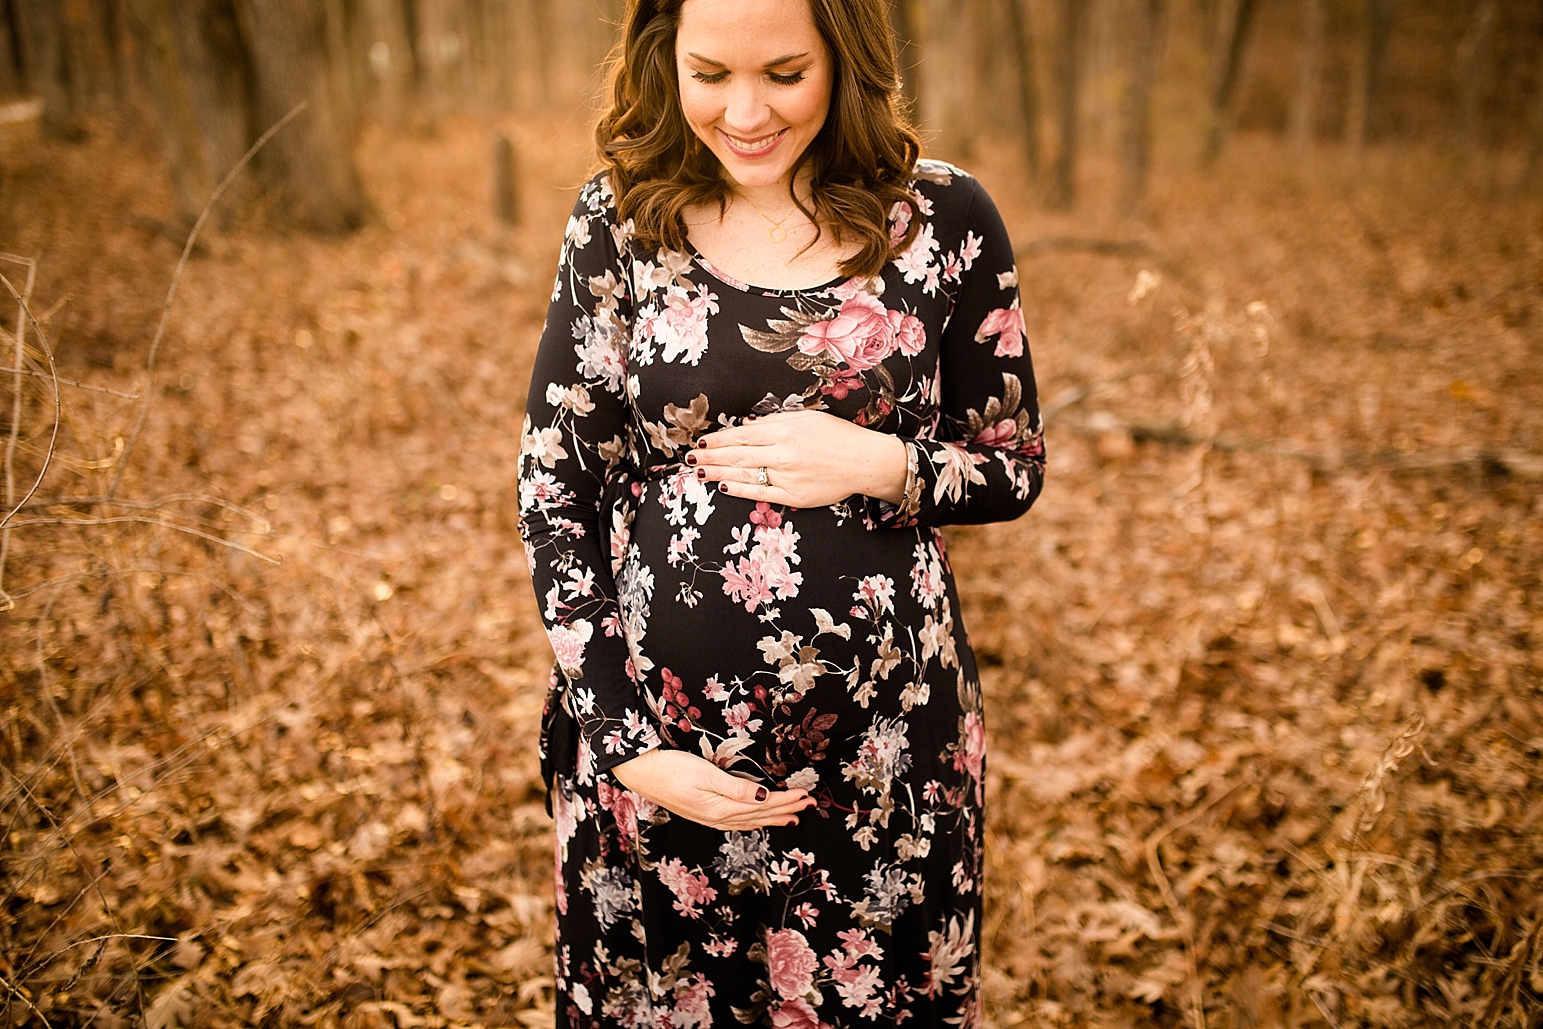 Quail Ridge Park Maternity Photos, Floral Maternity Dress, Jessica Lauren Photography